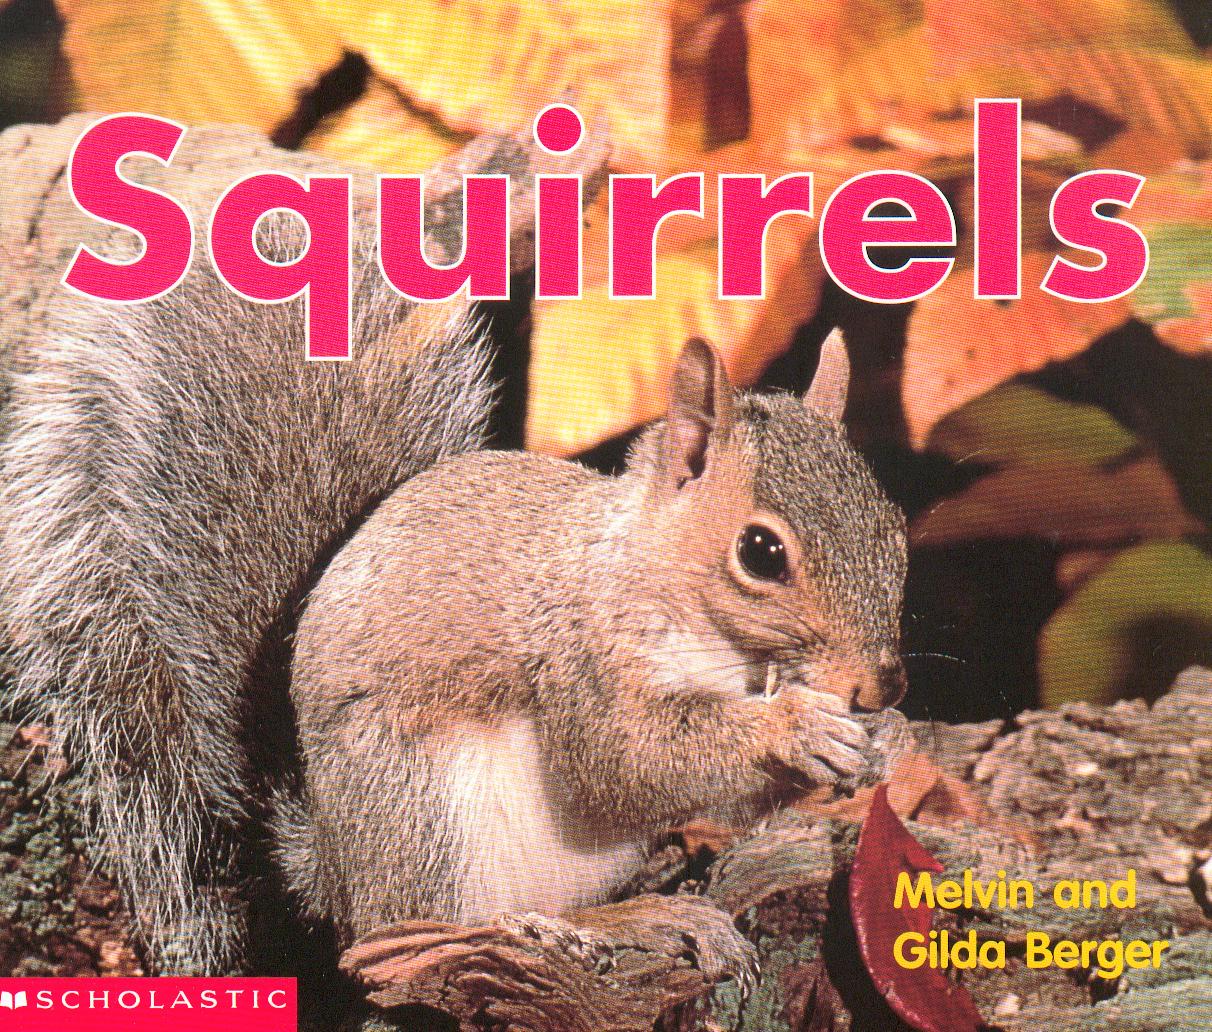 Squirrels / Melvin and Gilda Berger.